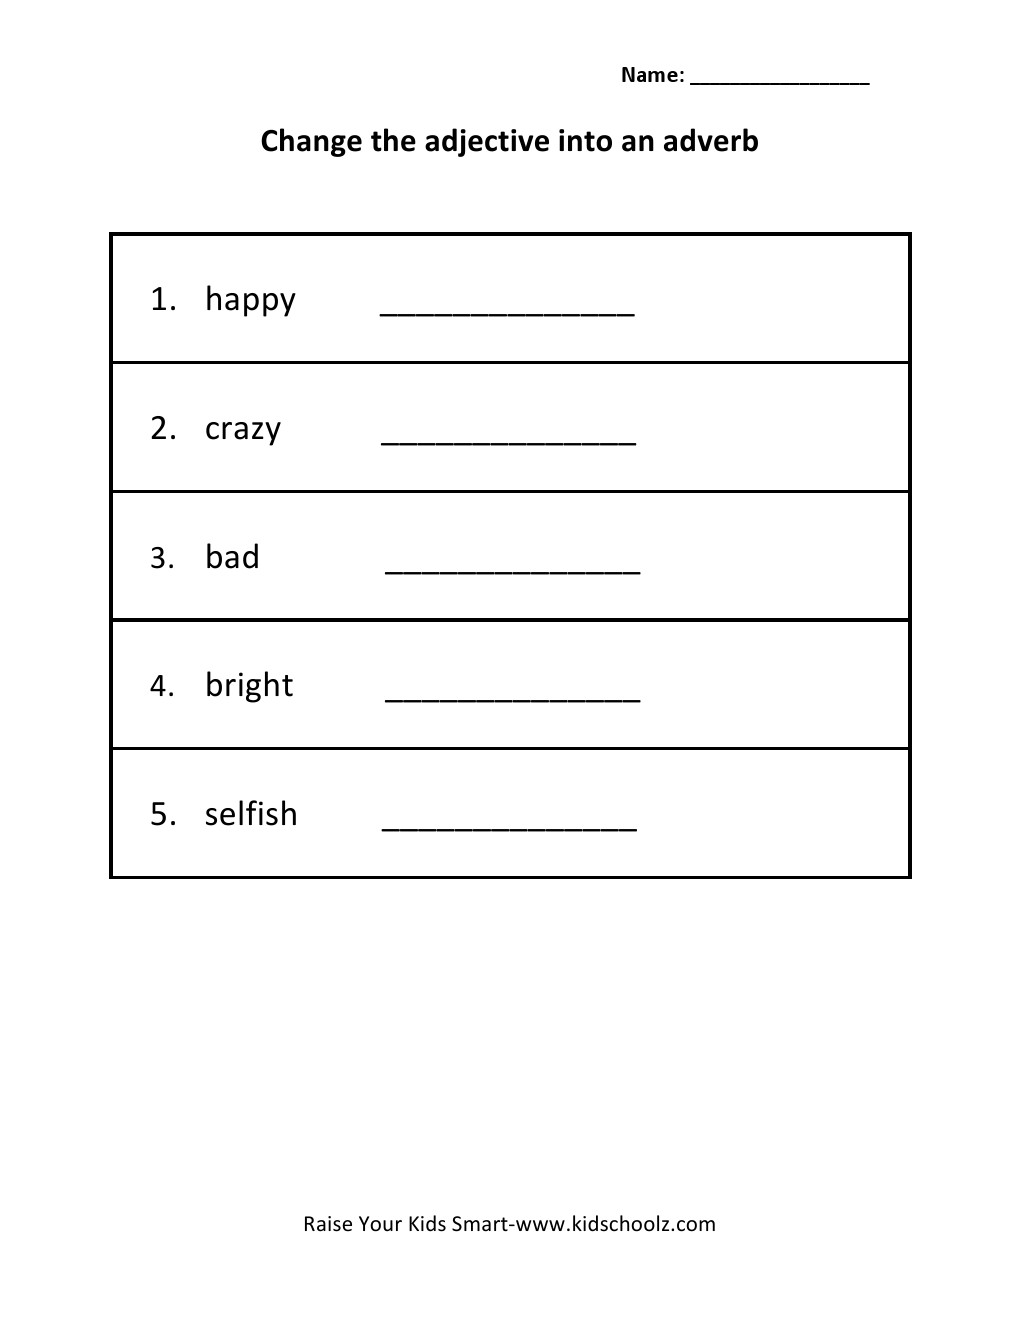 Grade 4 - Change Adjective to Adverb Worksheet